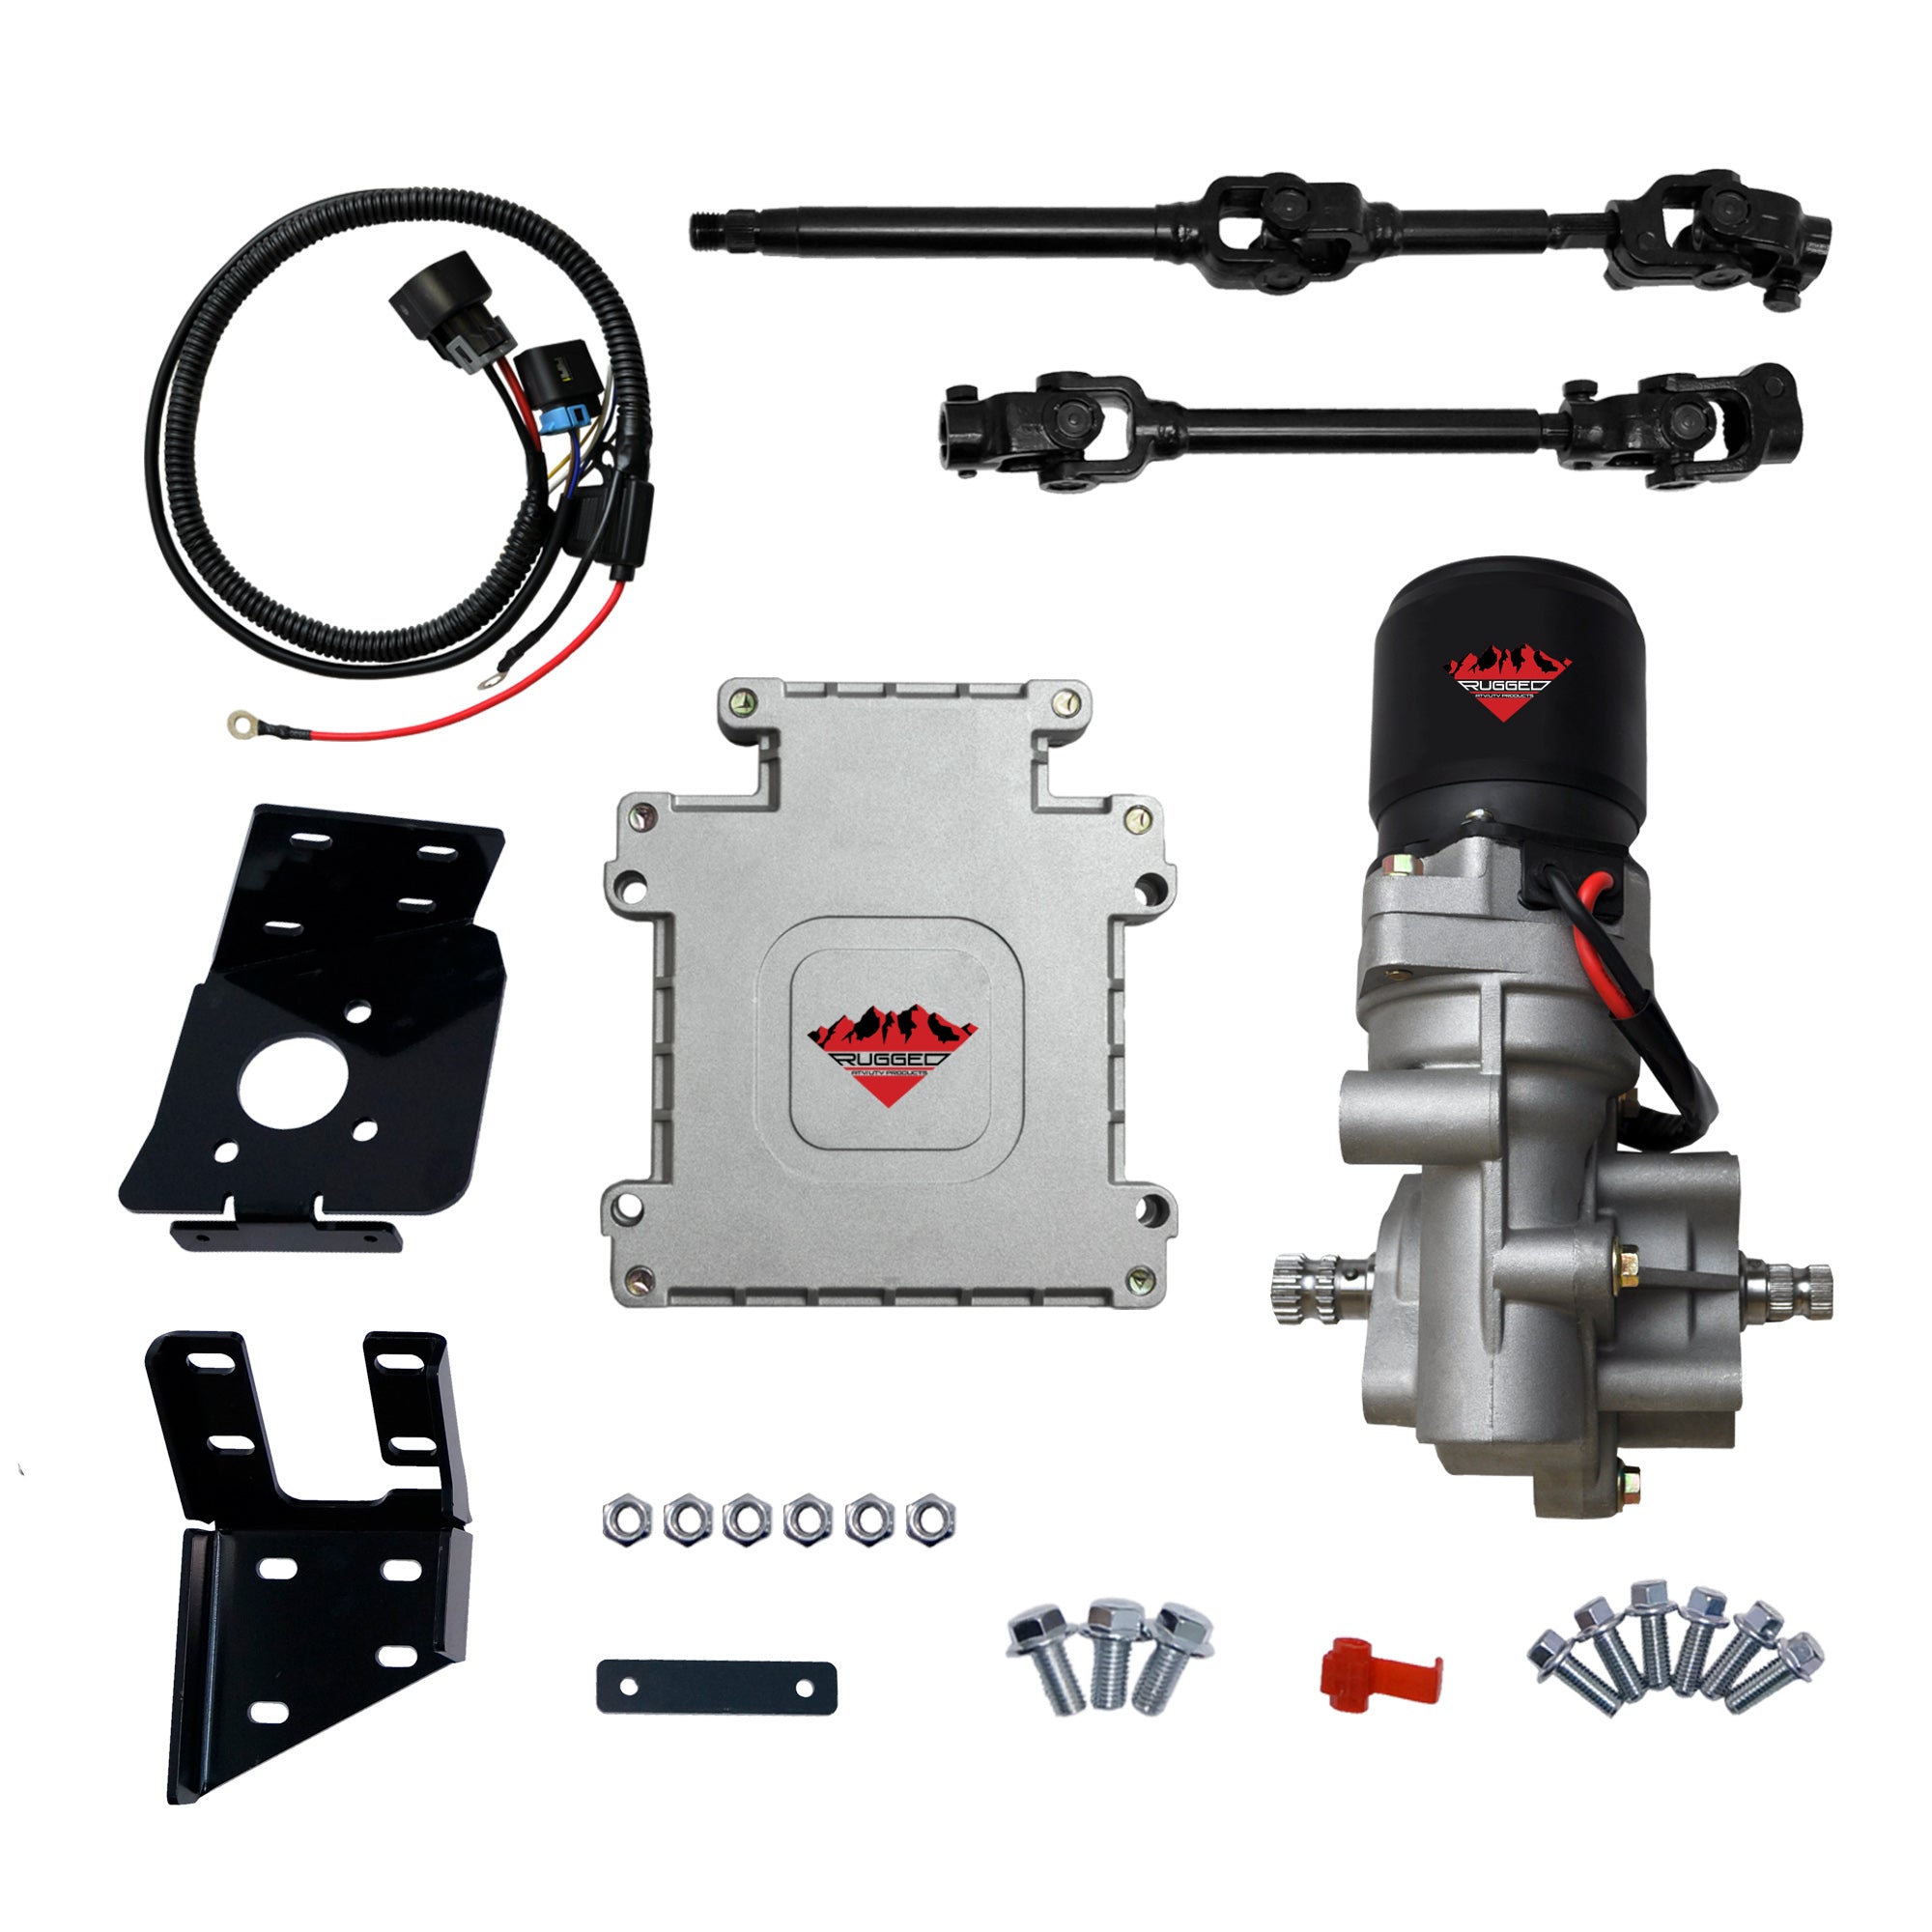 Electric Power Steering Kit for Polaris Sportsman 450 